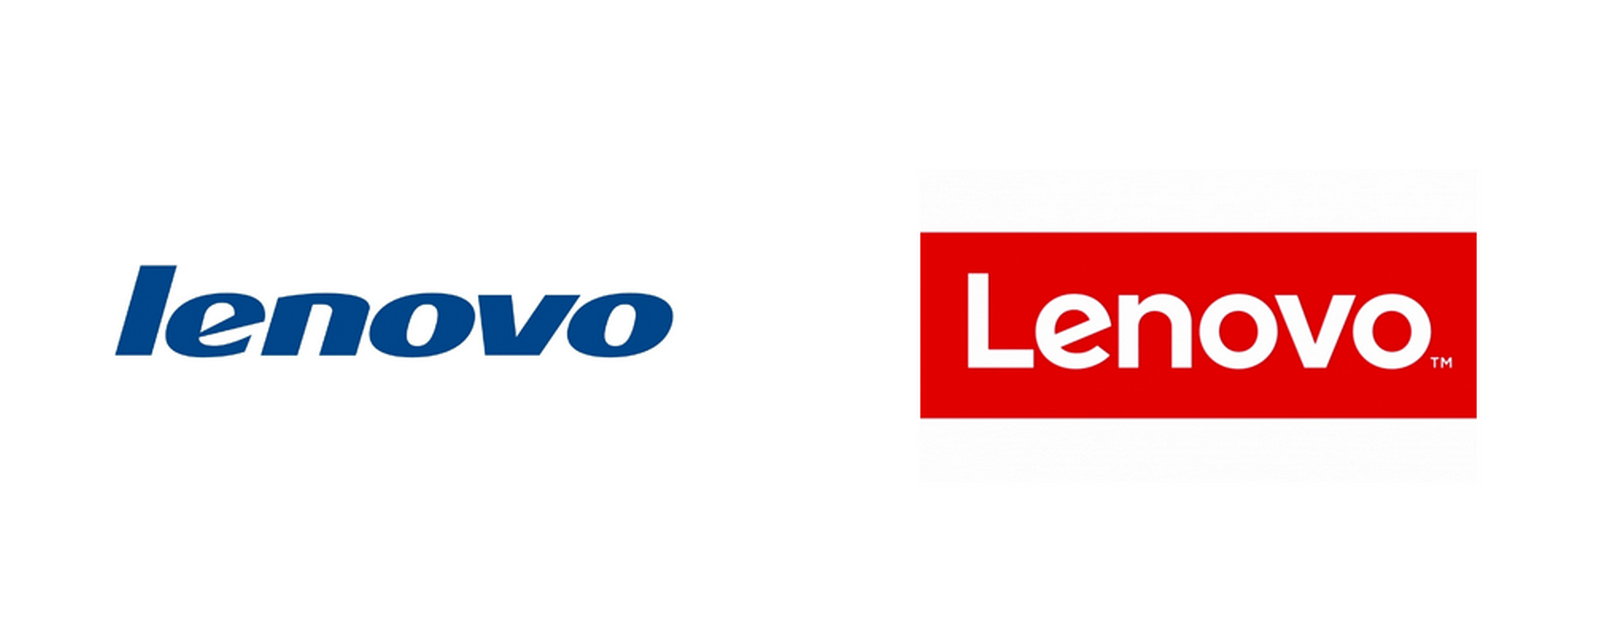 lenovo-old-new-logo